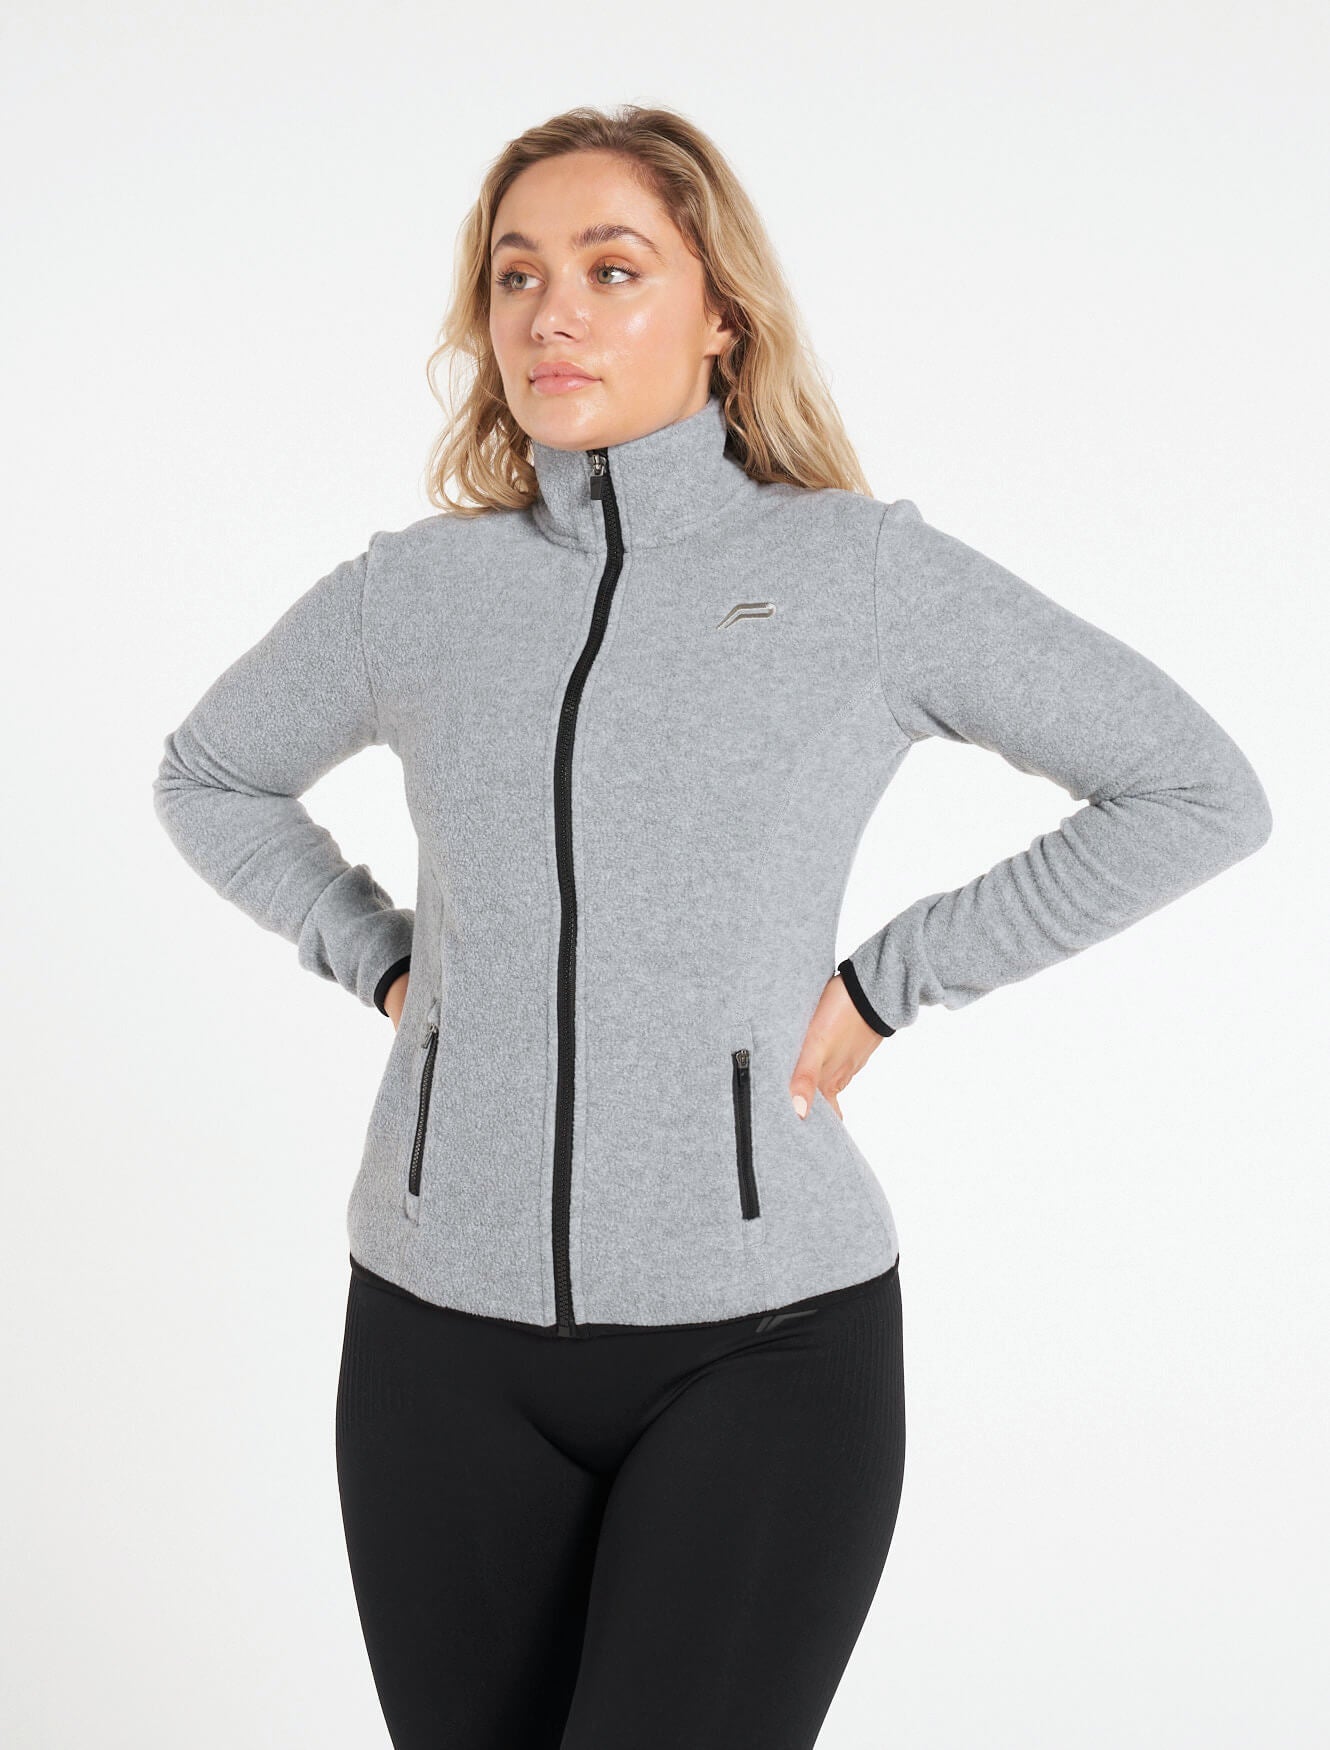 Explore Full-Zip Jacket / Grey Marl Pursue Fitness 1